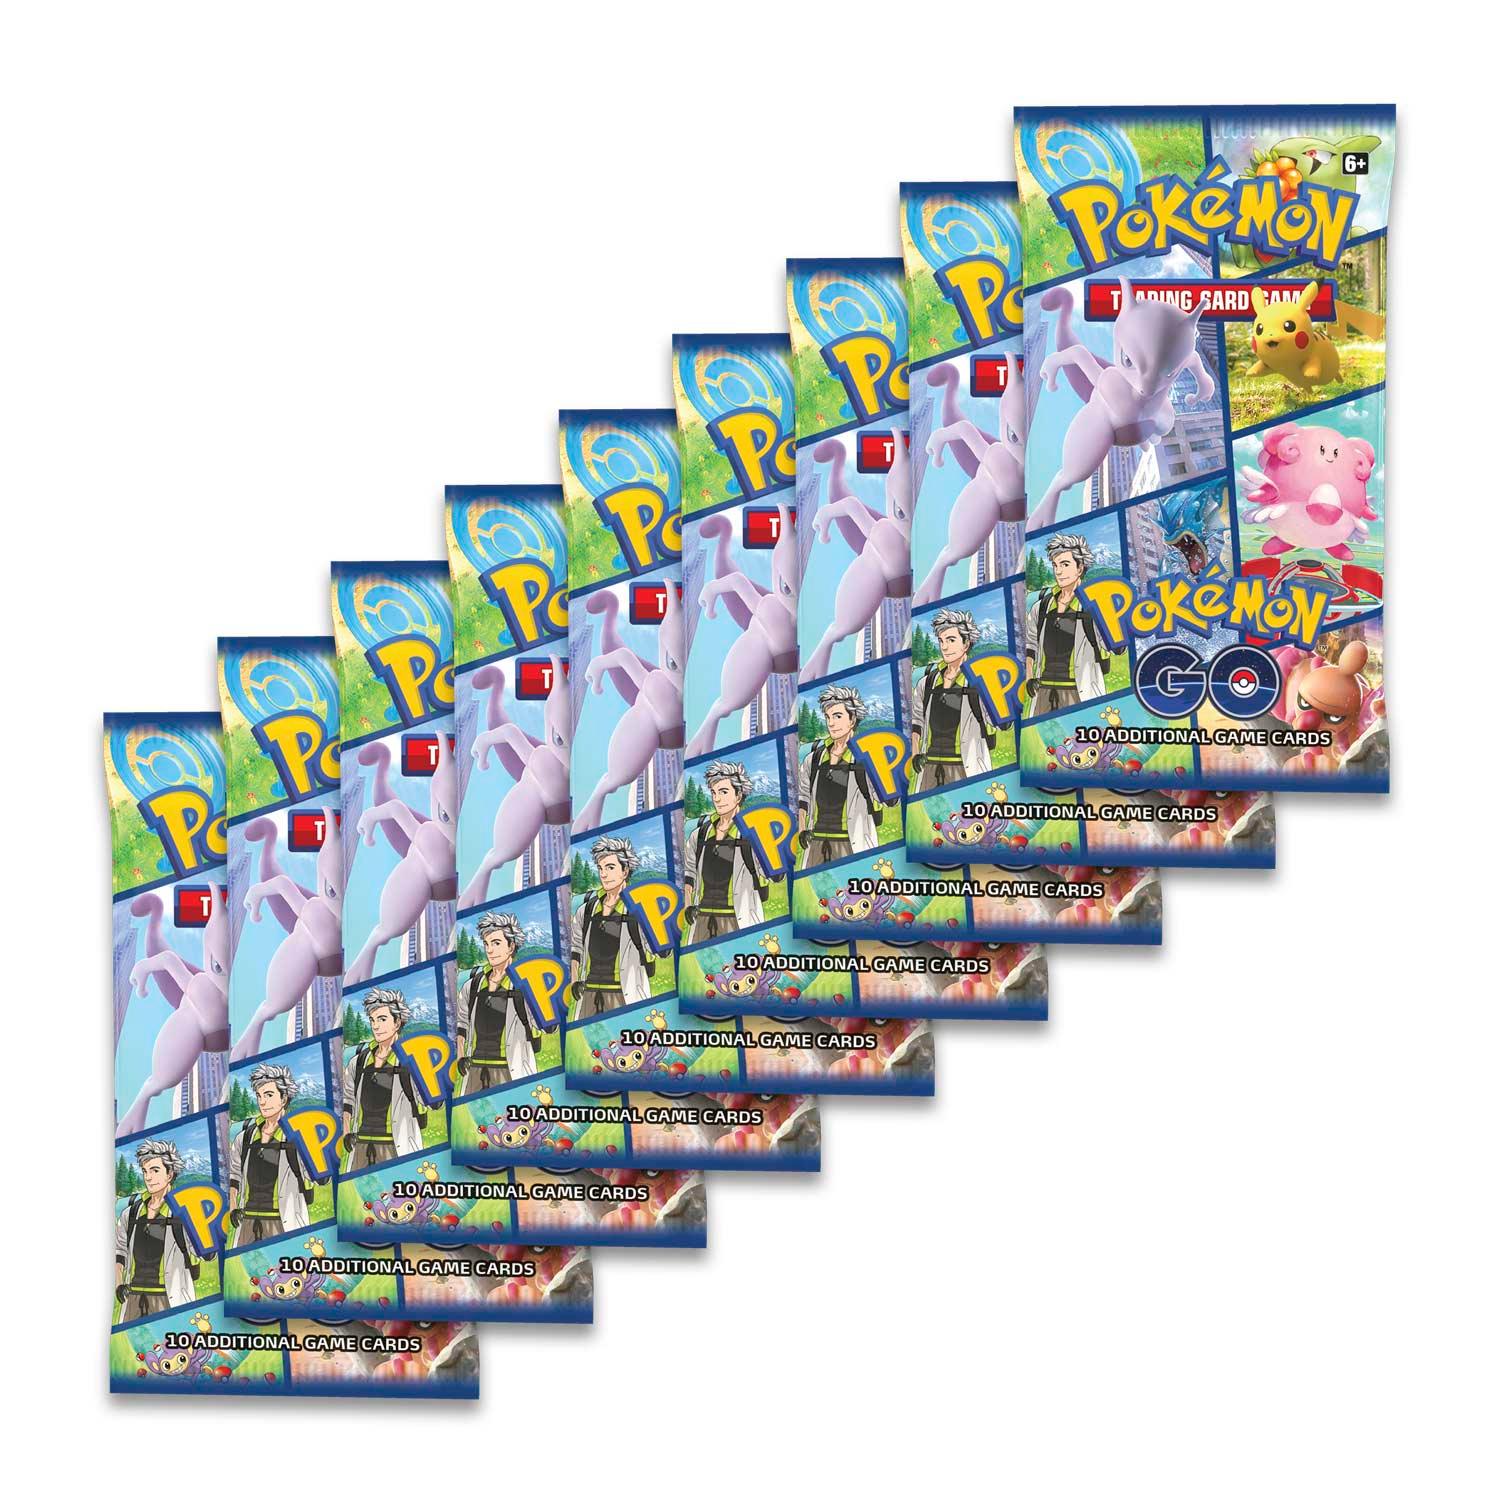 Pokemon Box - Premier Deck Holder Collection - Pokemon GO - Dragonite VSTAR - Hobby Champion Inc